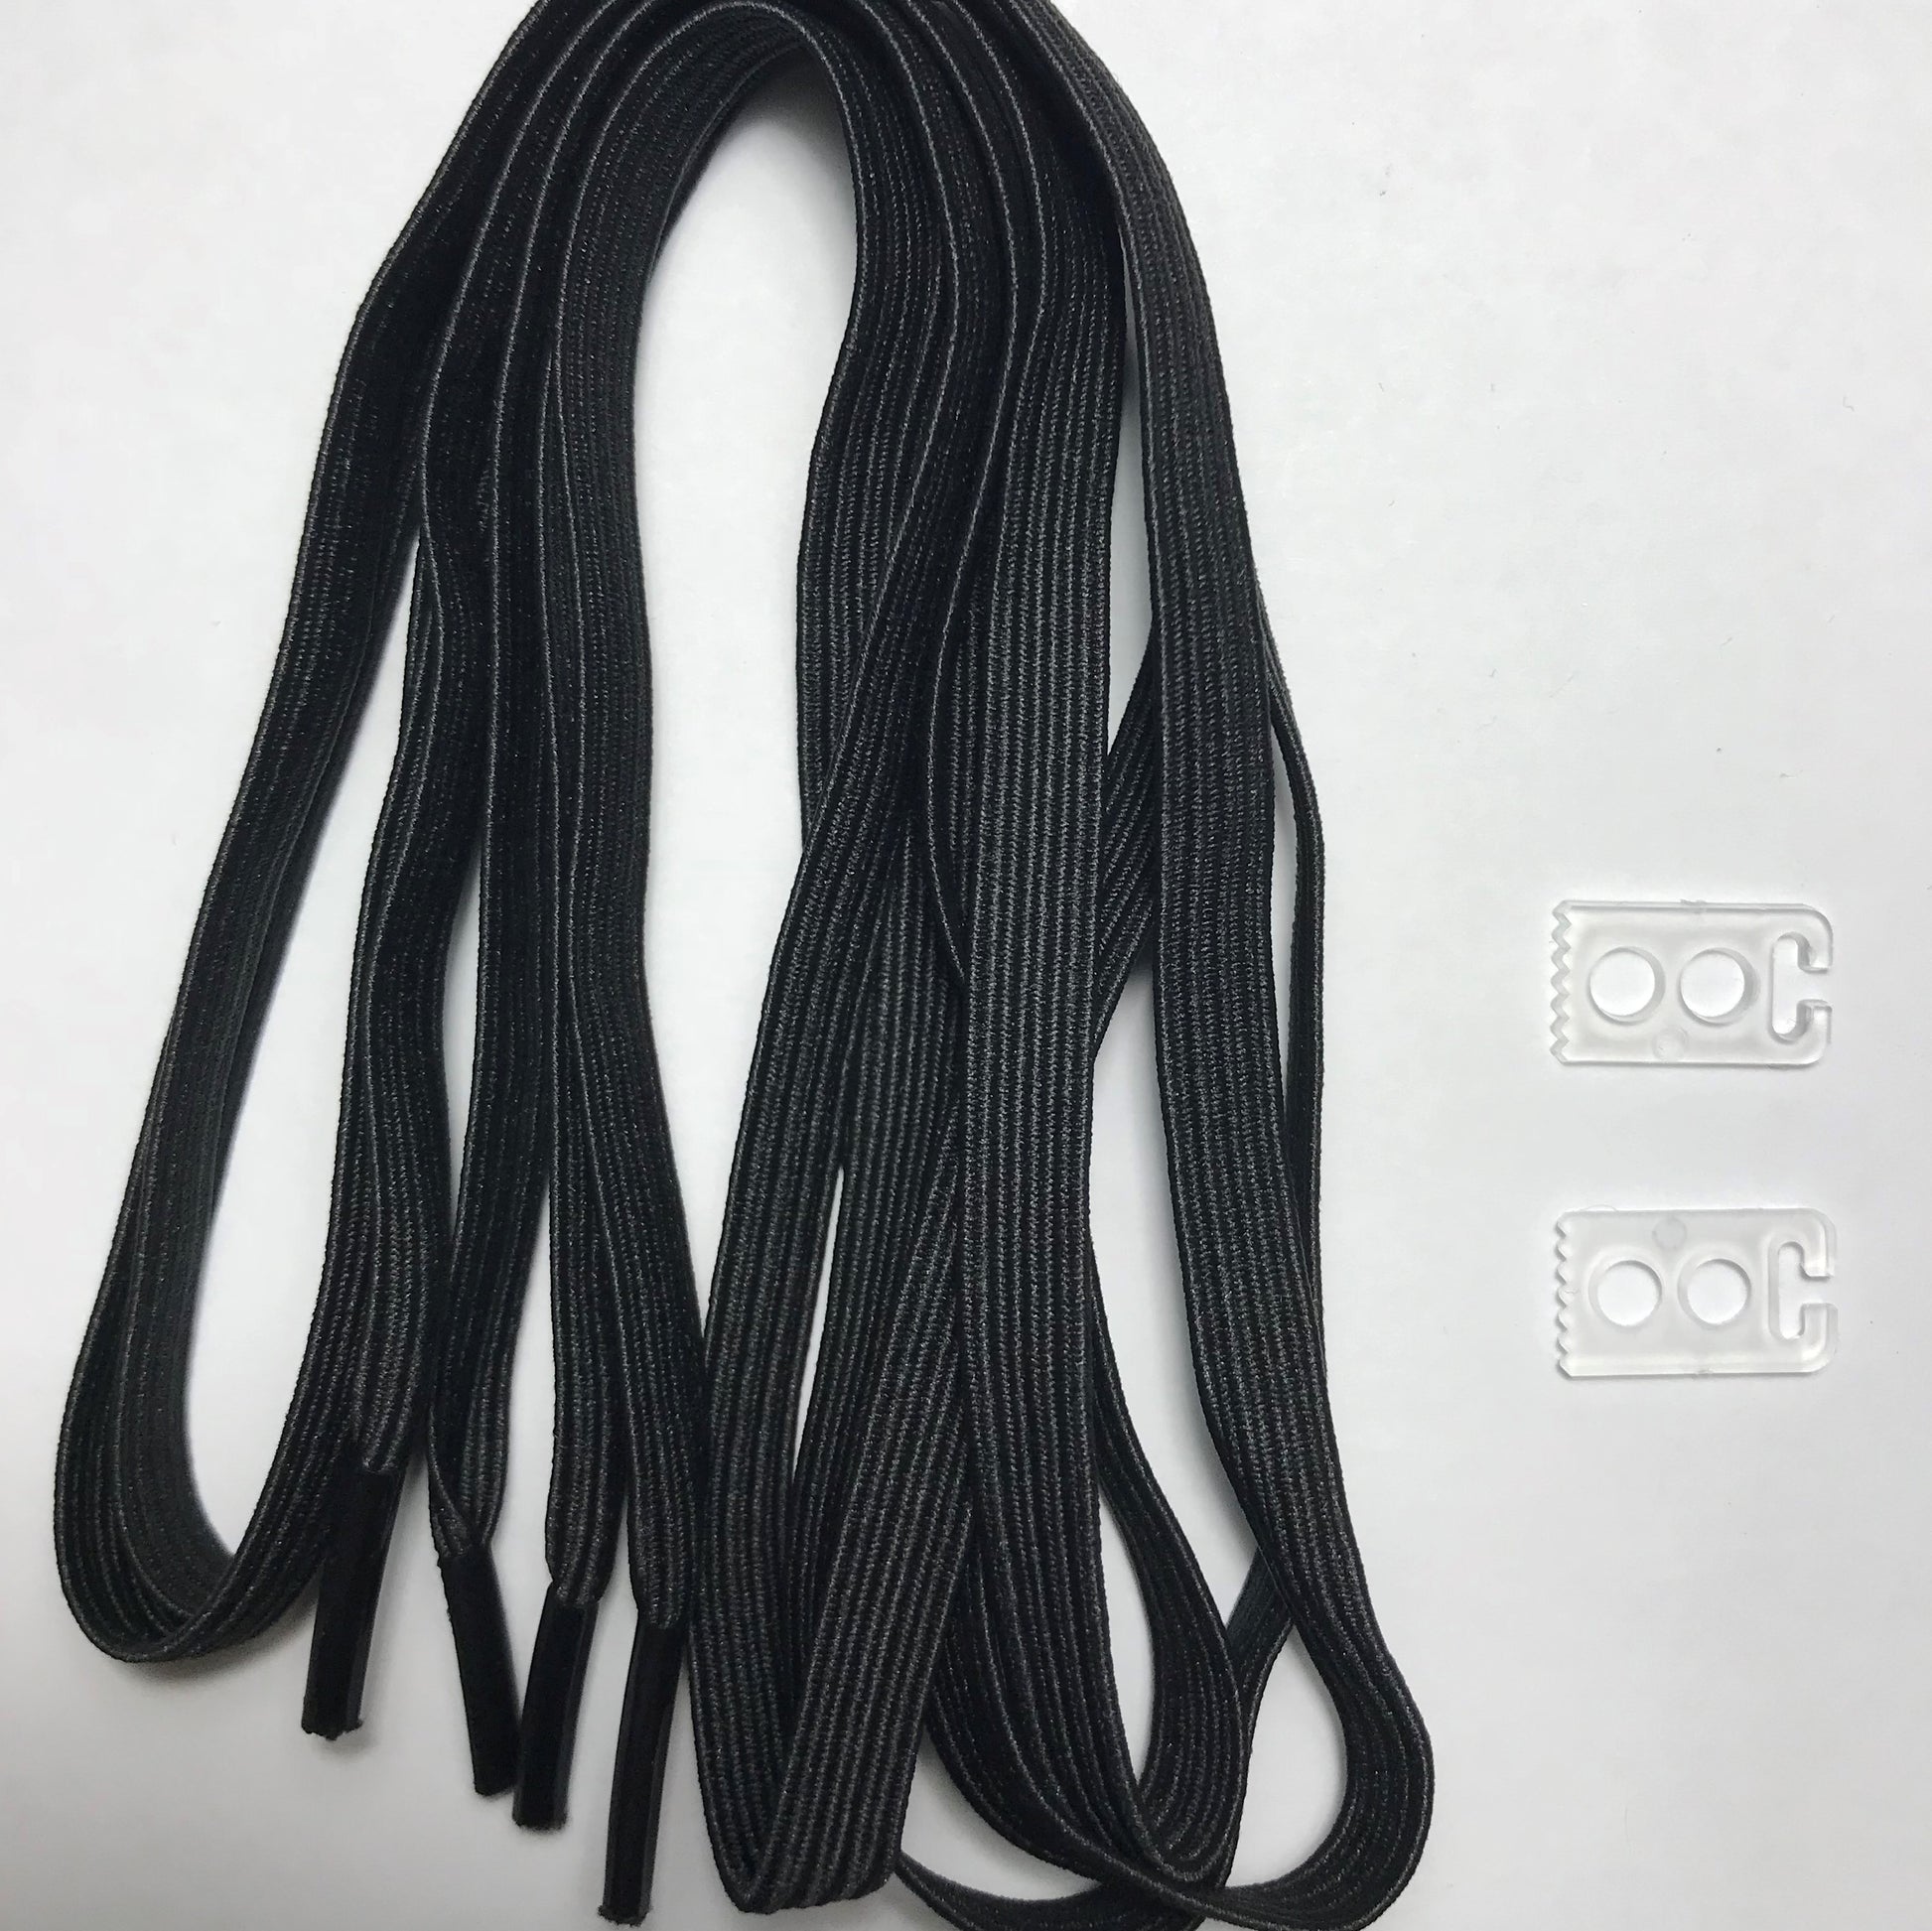 Black Quick Lock No Tie Elastic Shoelaces – The Original Stretchlace